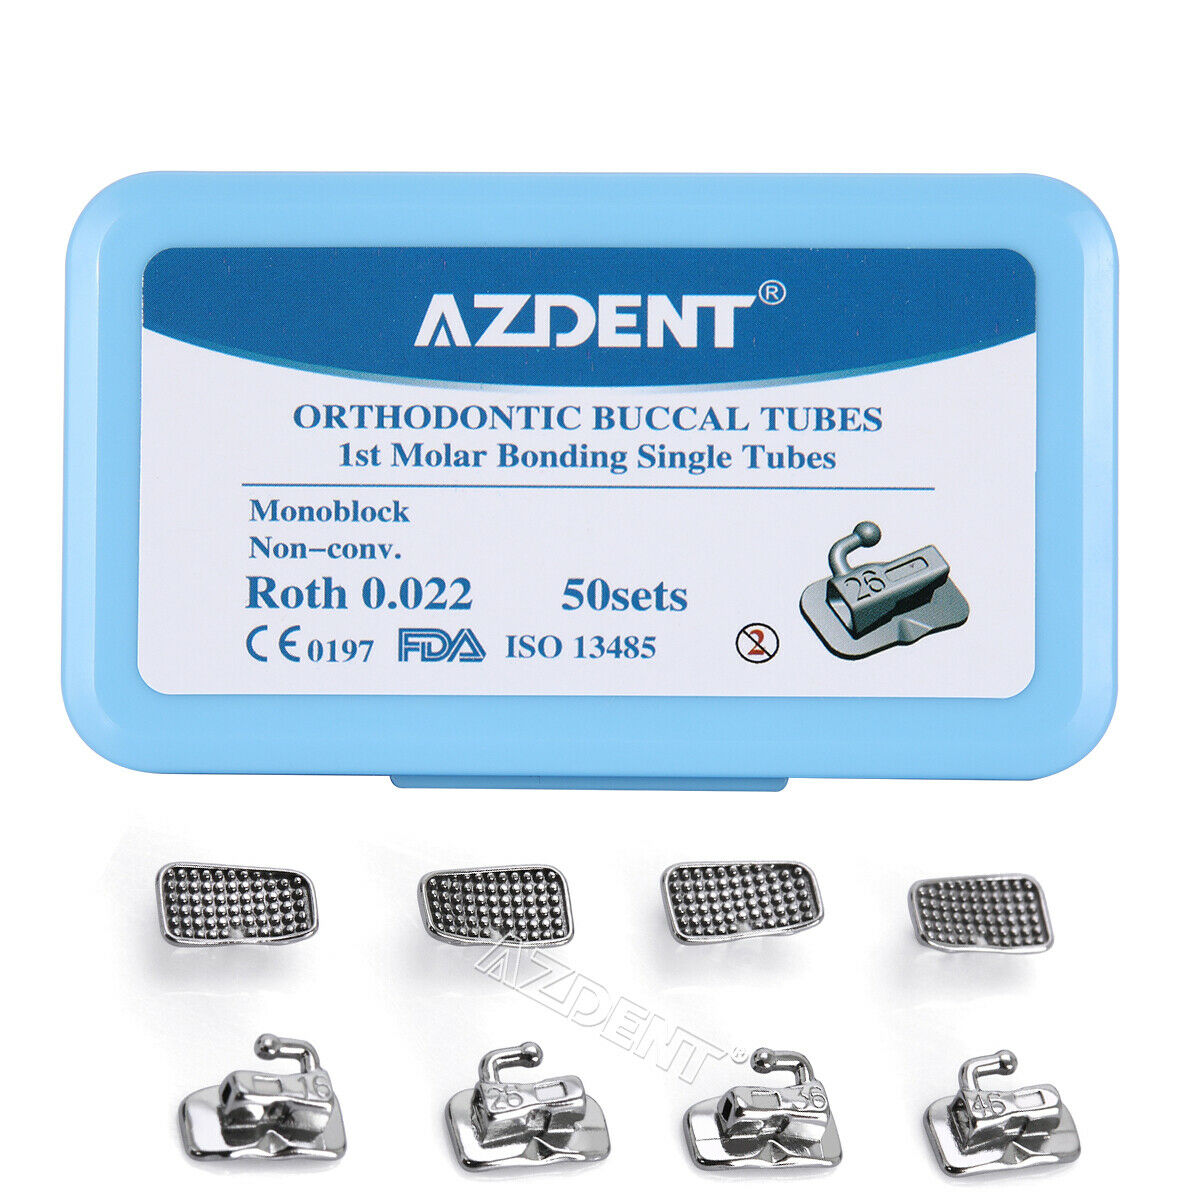 50sets Azdent Dental Orthodontic Sgl Buccal Tube Roth.022 1st Molar Non-conv